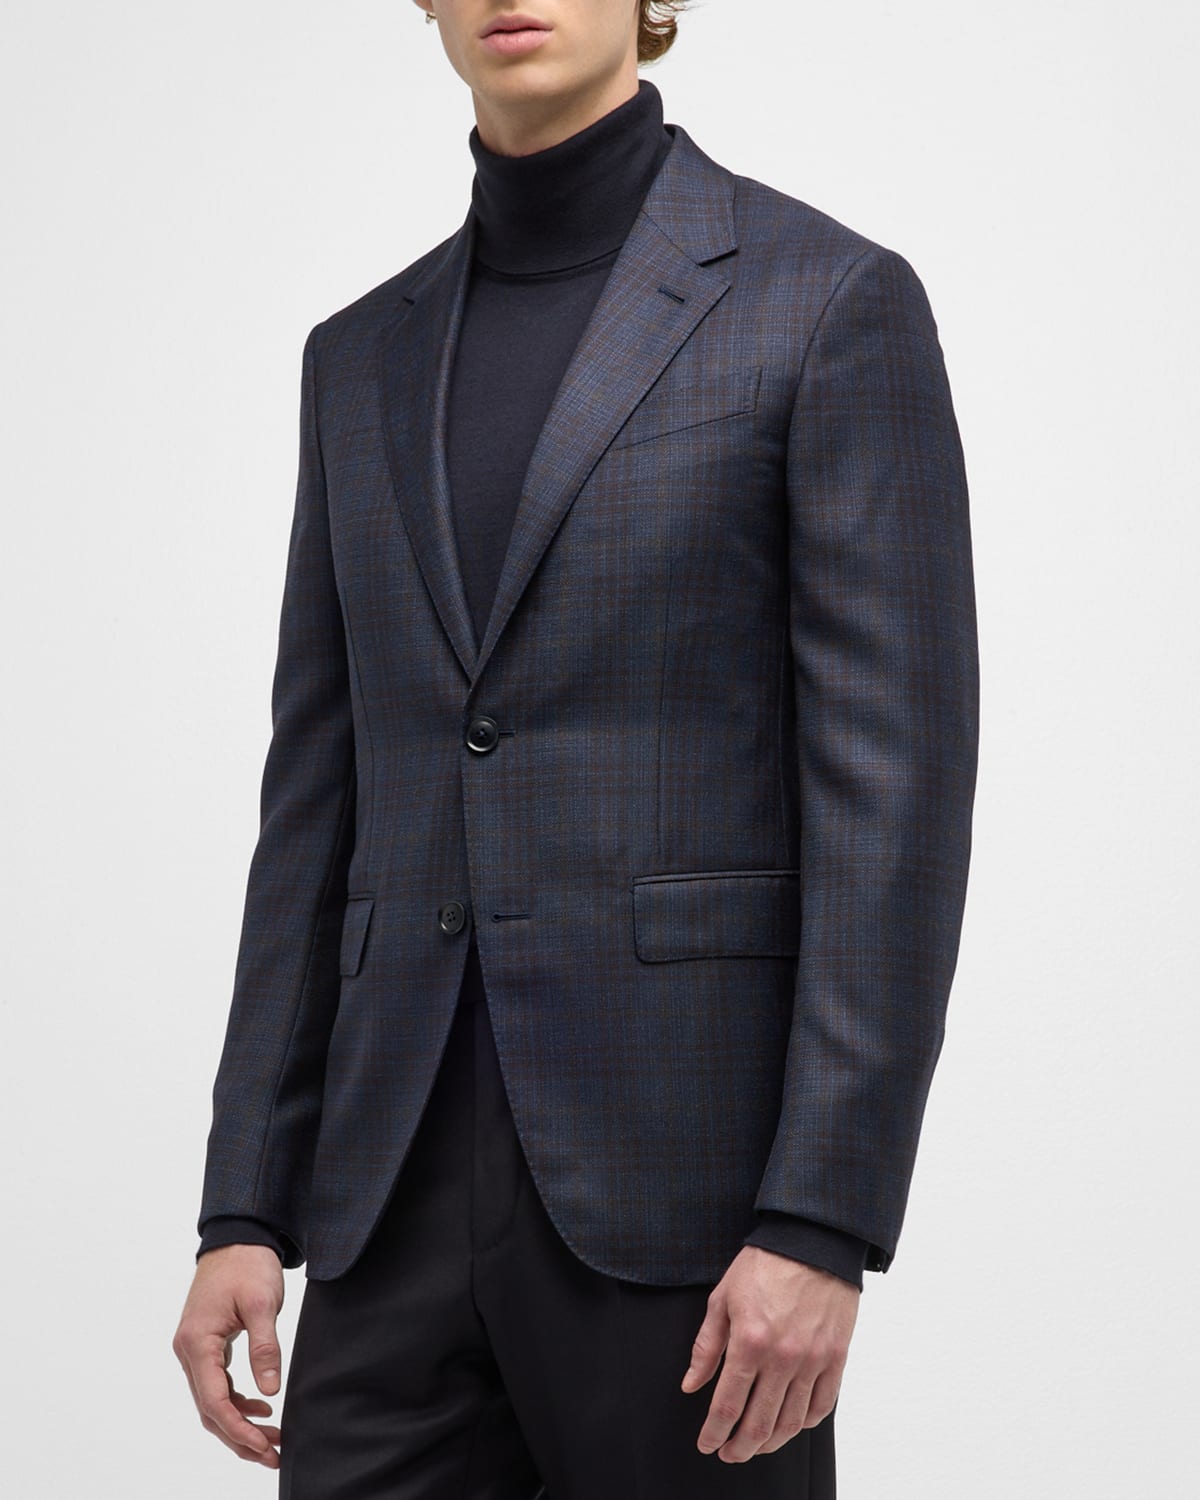 ZEGNA Men's Plaid Wool-Blend Sport Coat | Neiman Marcus